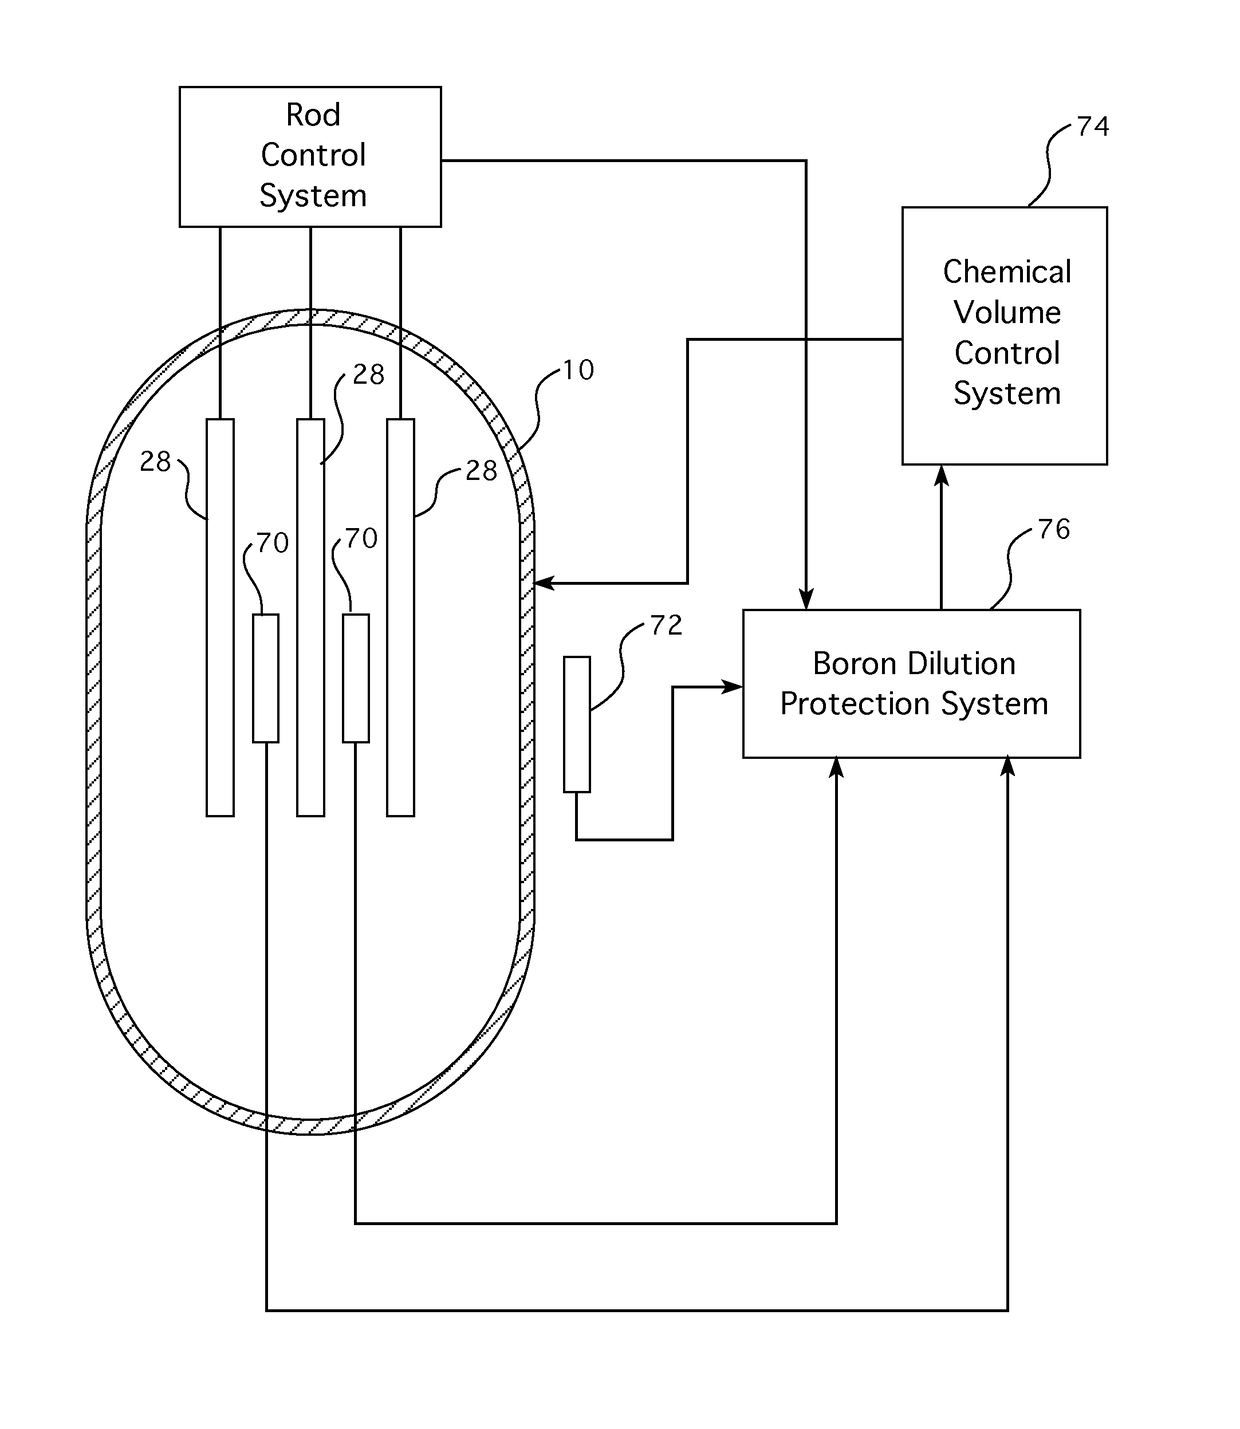 Subcritical Reactivity Monitor Utilizing Prompt Self-Powered Incore Detectors